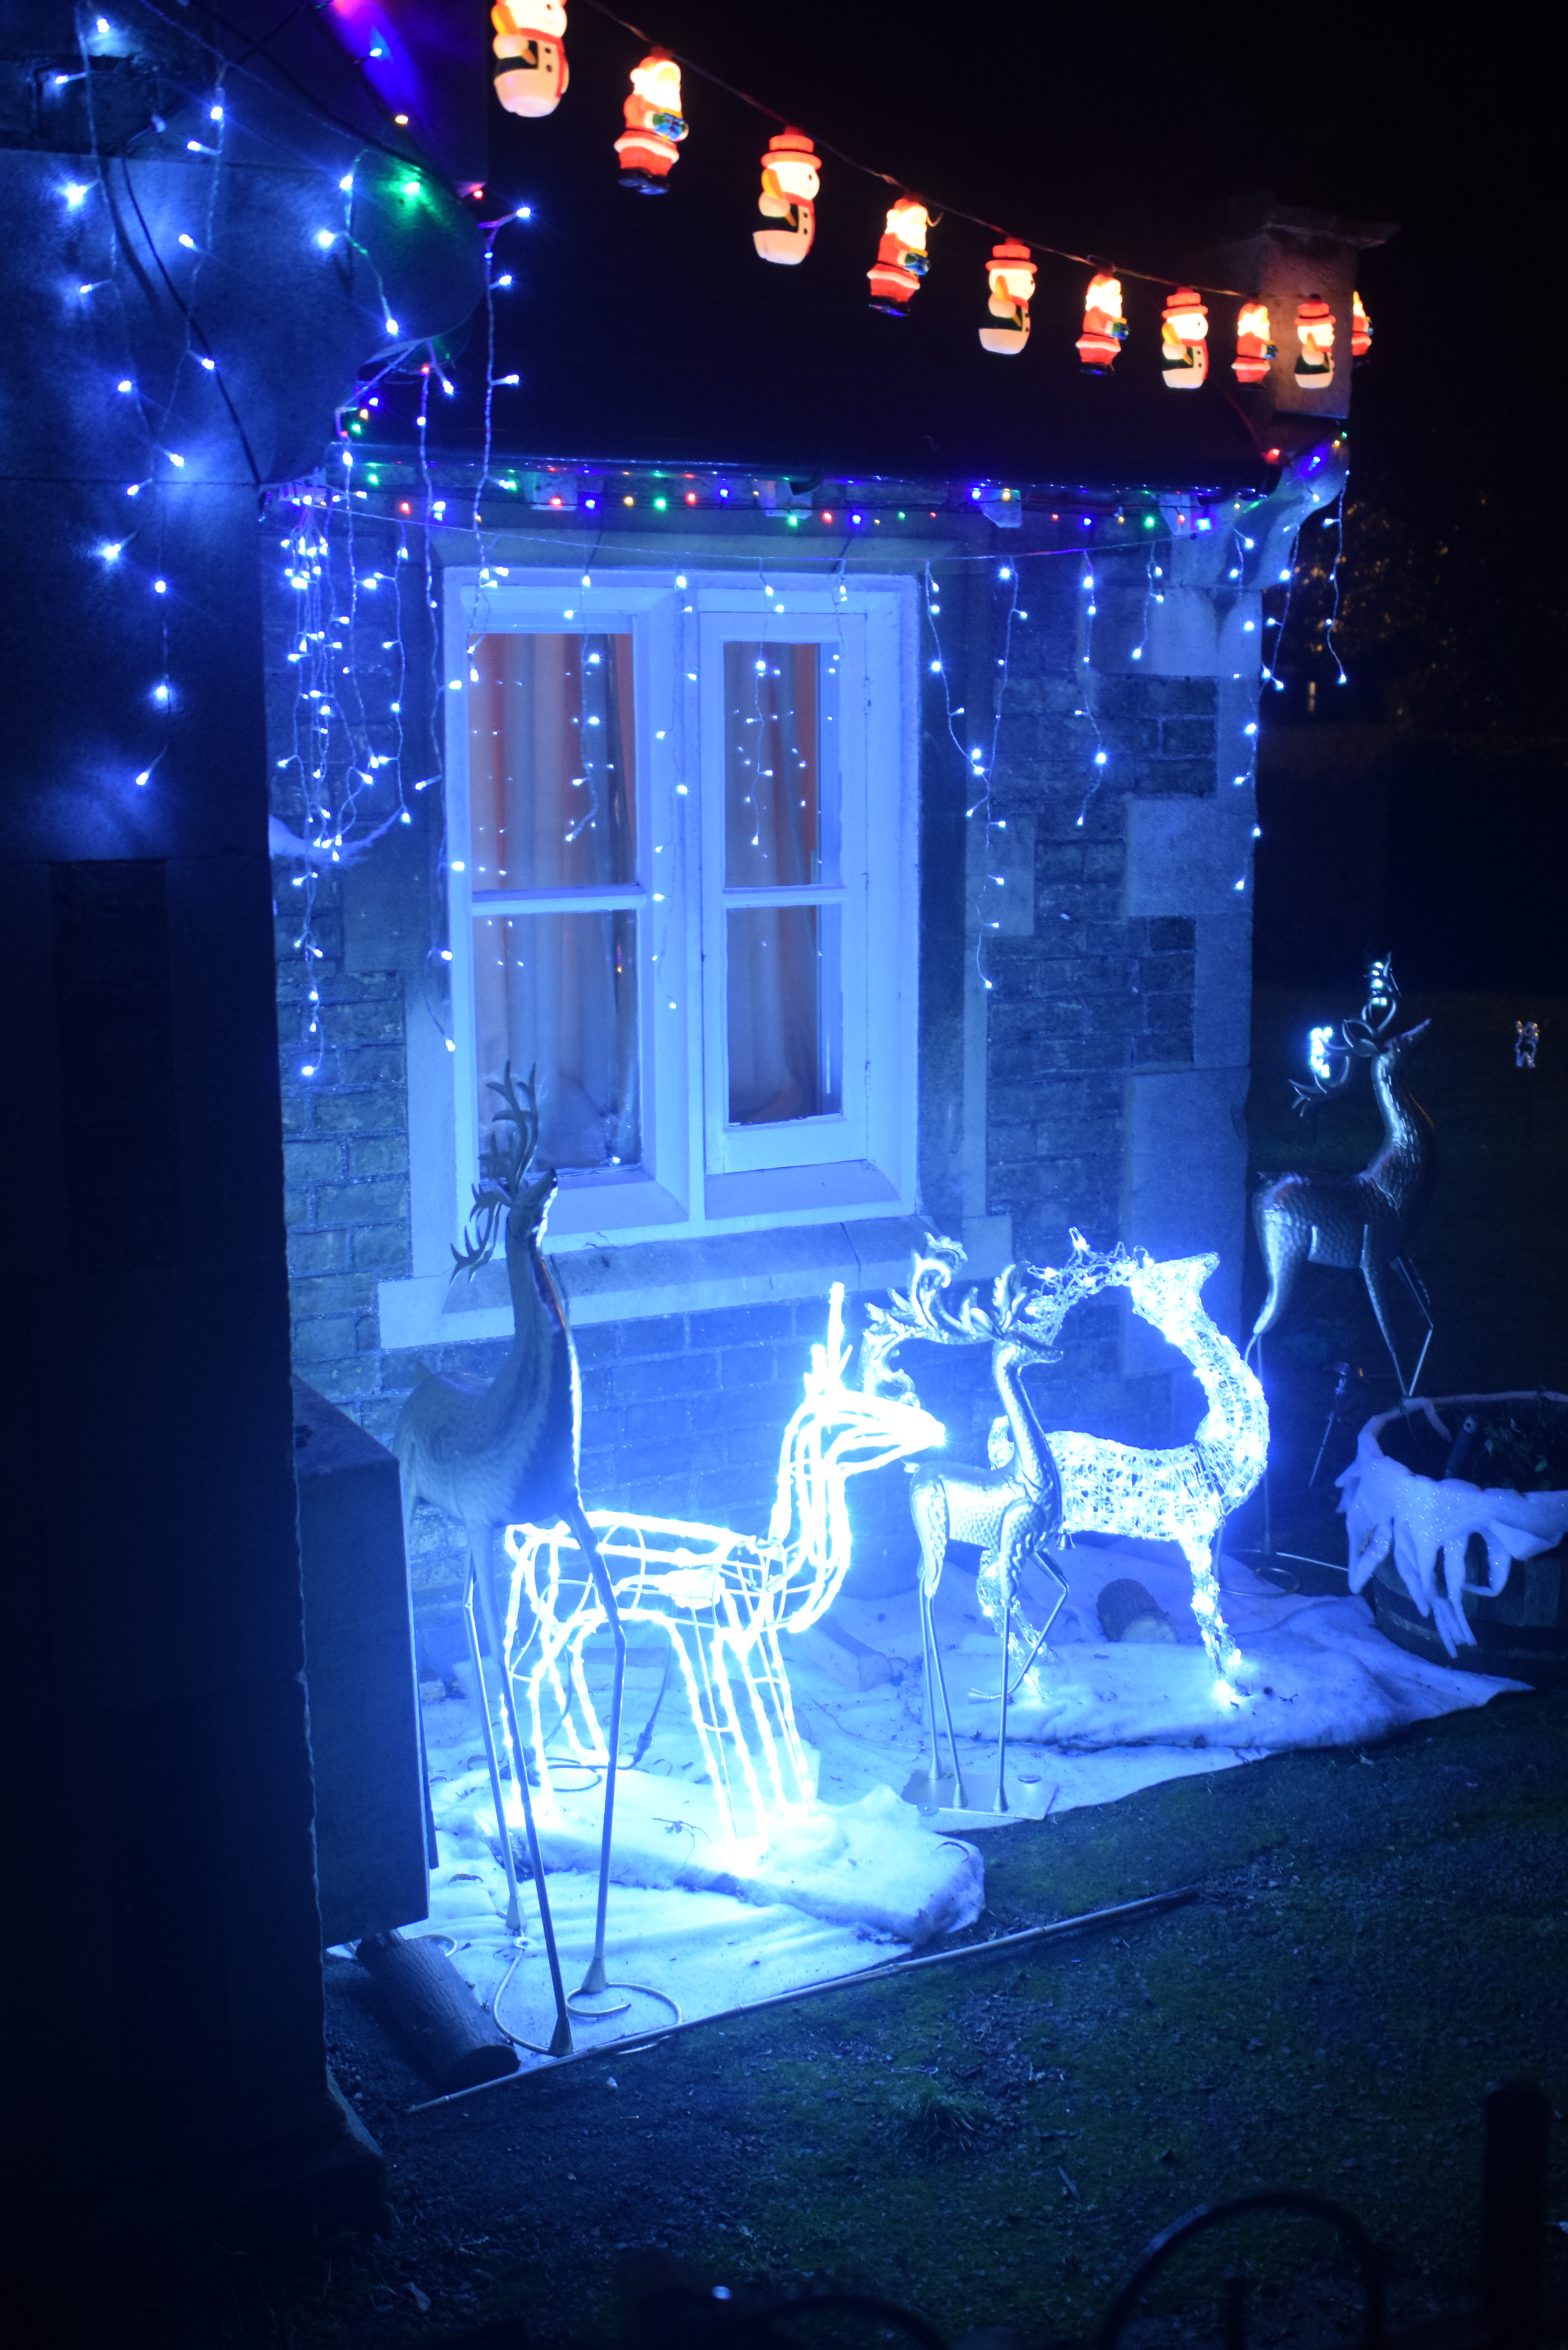 Christmas decoration around "The Lodge" on Cherry Hinton Road in Cambridge